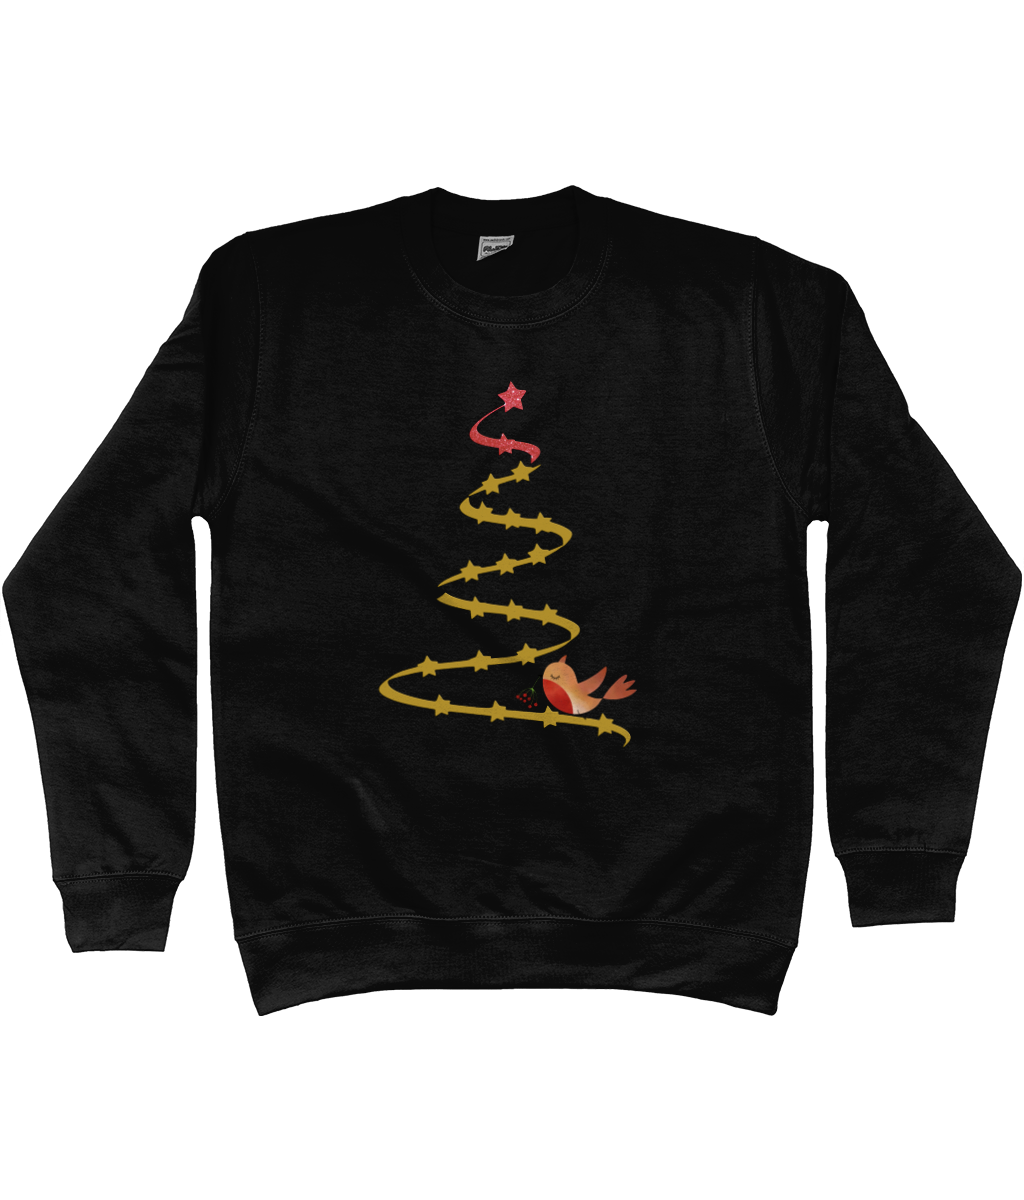 Christmas Tree and Robin Sweatshirt